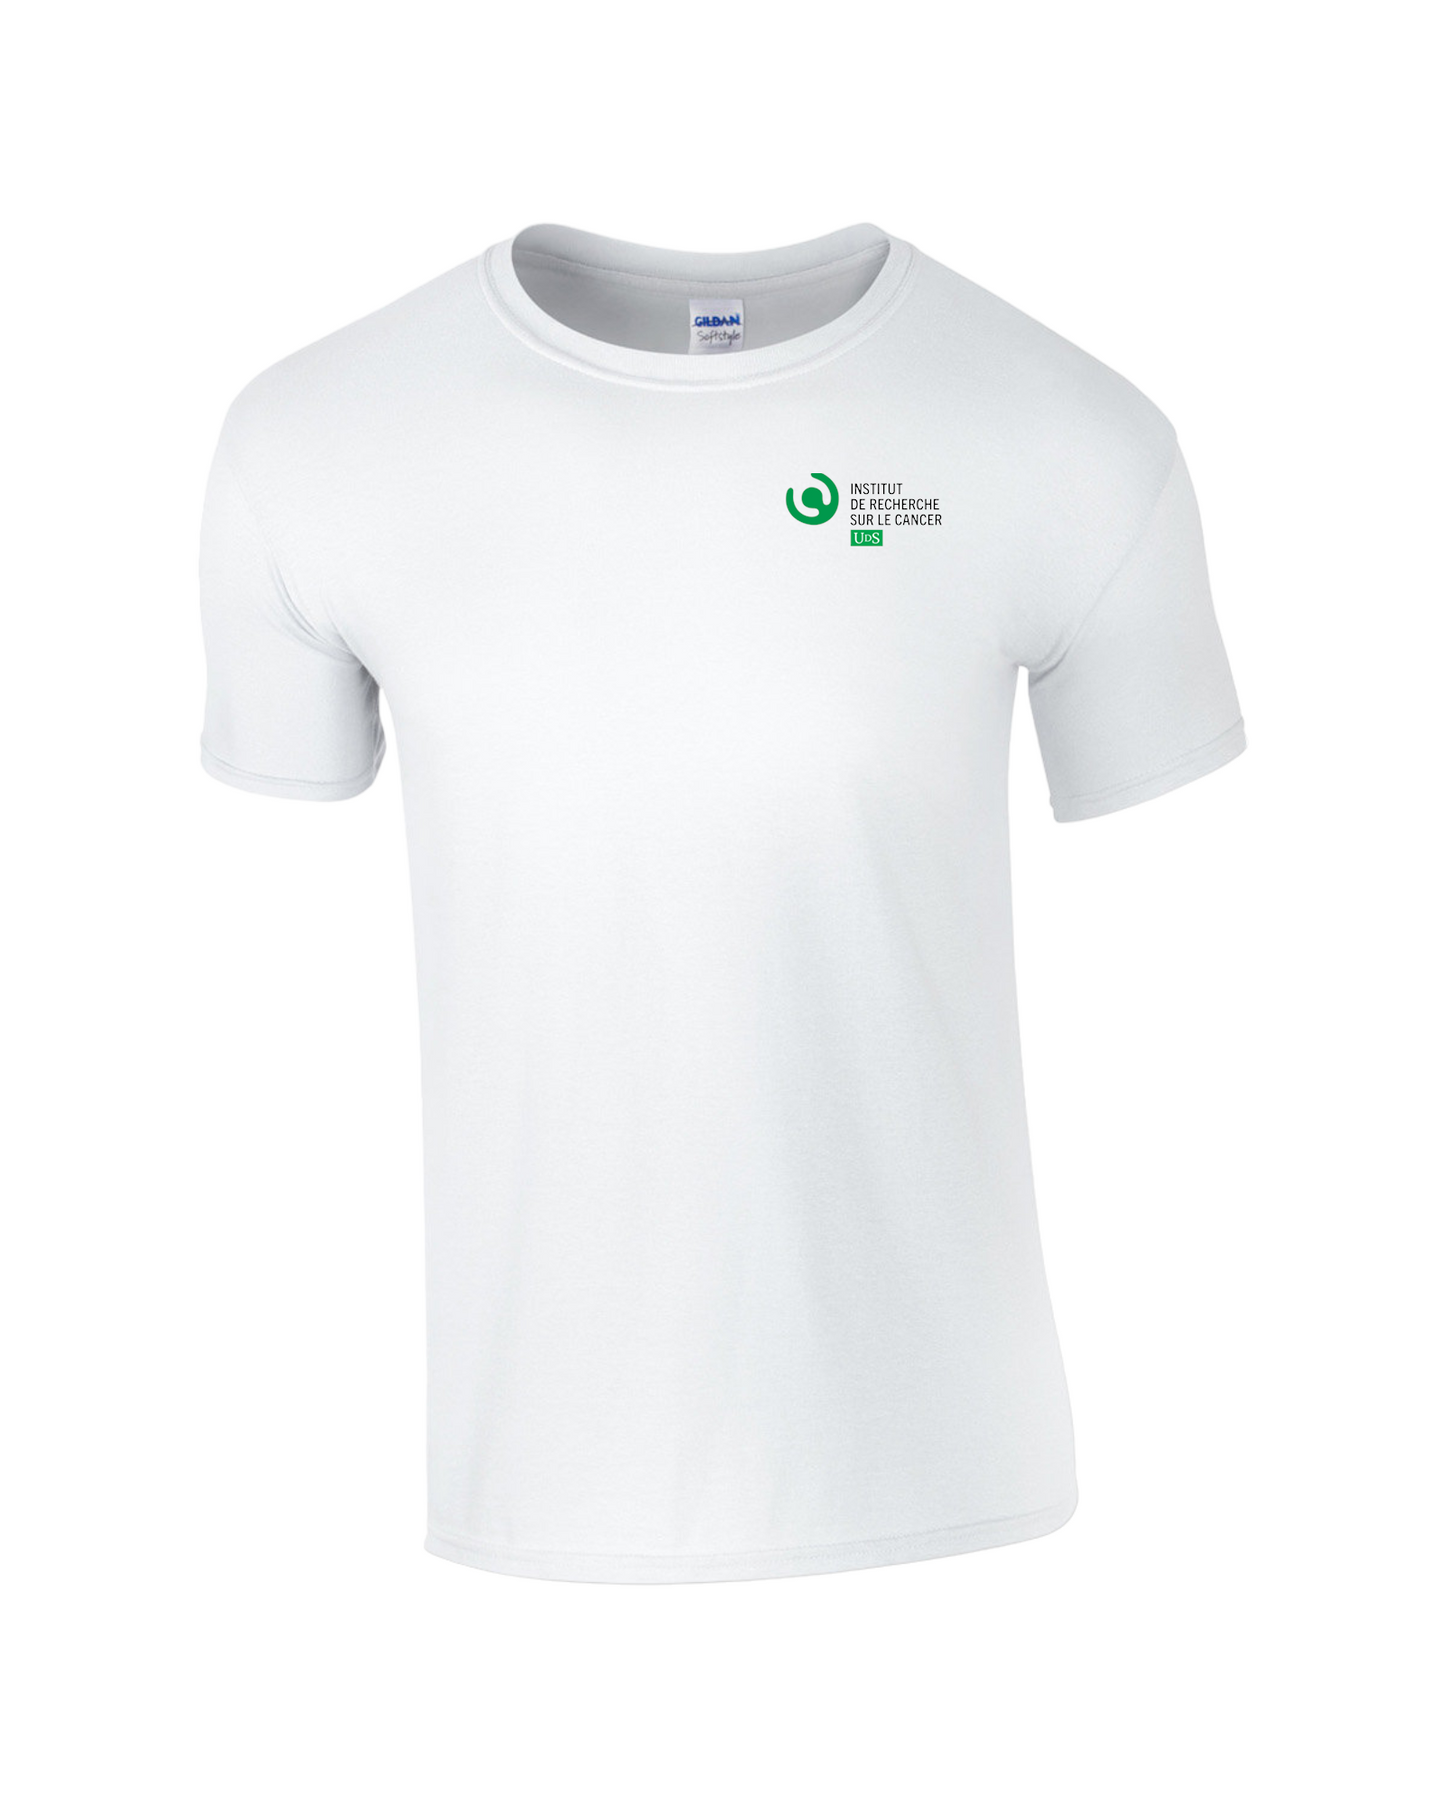 Men's short-sleeved t-shirt #G640-IRCUS-LOGO